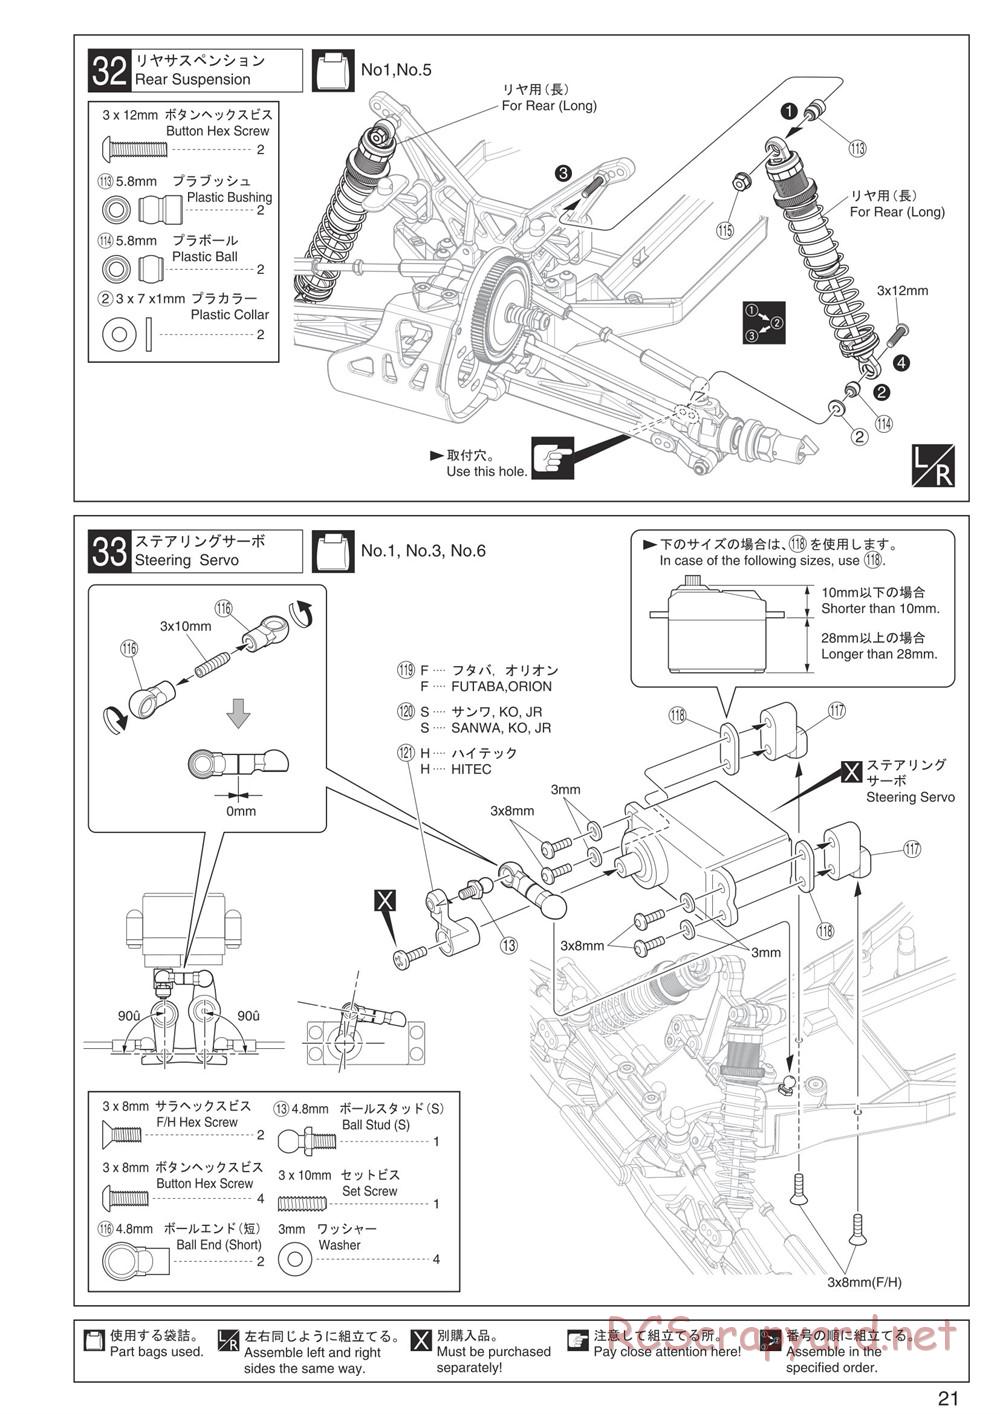 Kyosho - Ultima RT5 - Manual - Page 21